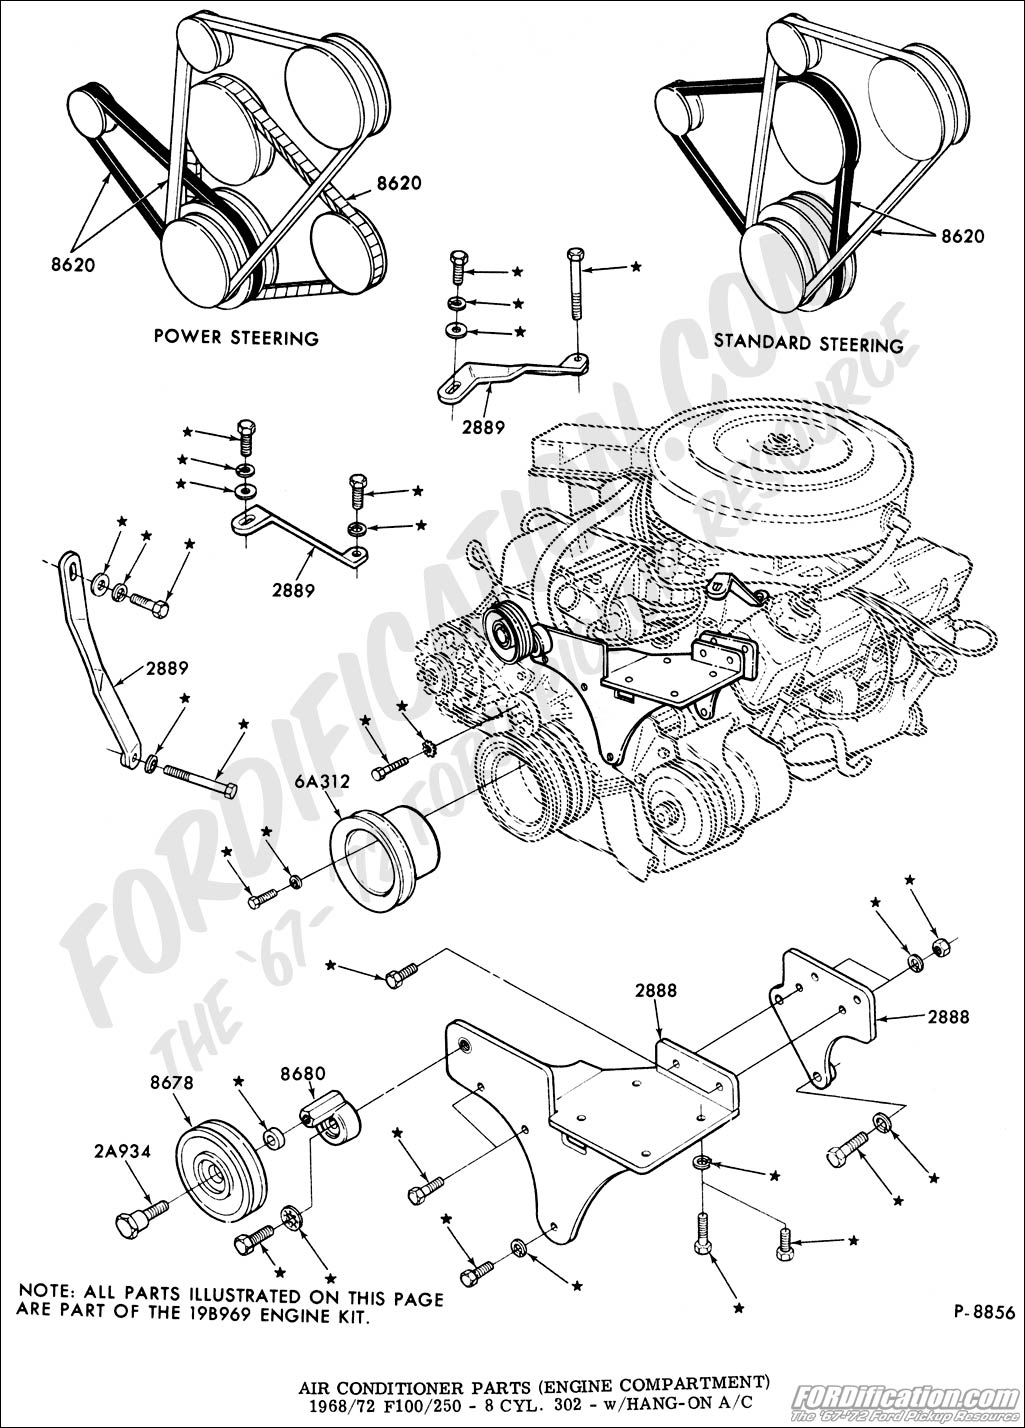 Diagram] 1988 Ford 302 Engine Diagram Full Version Hd